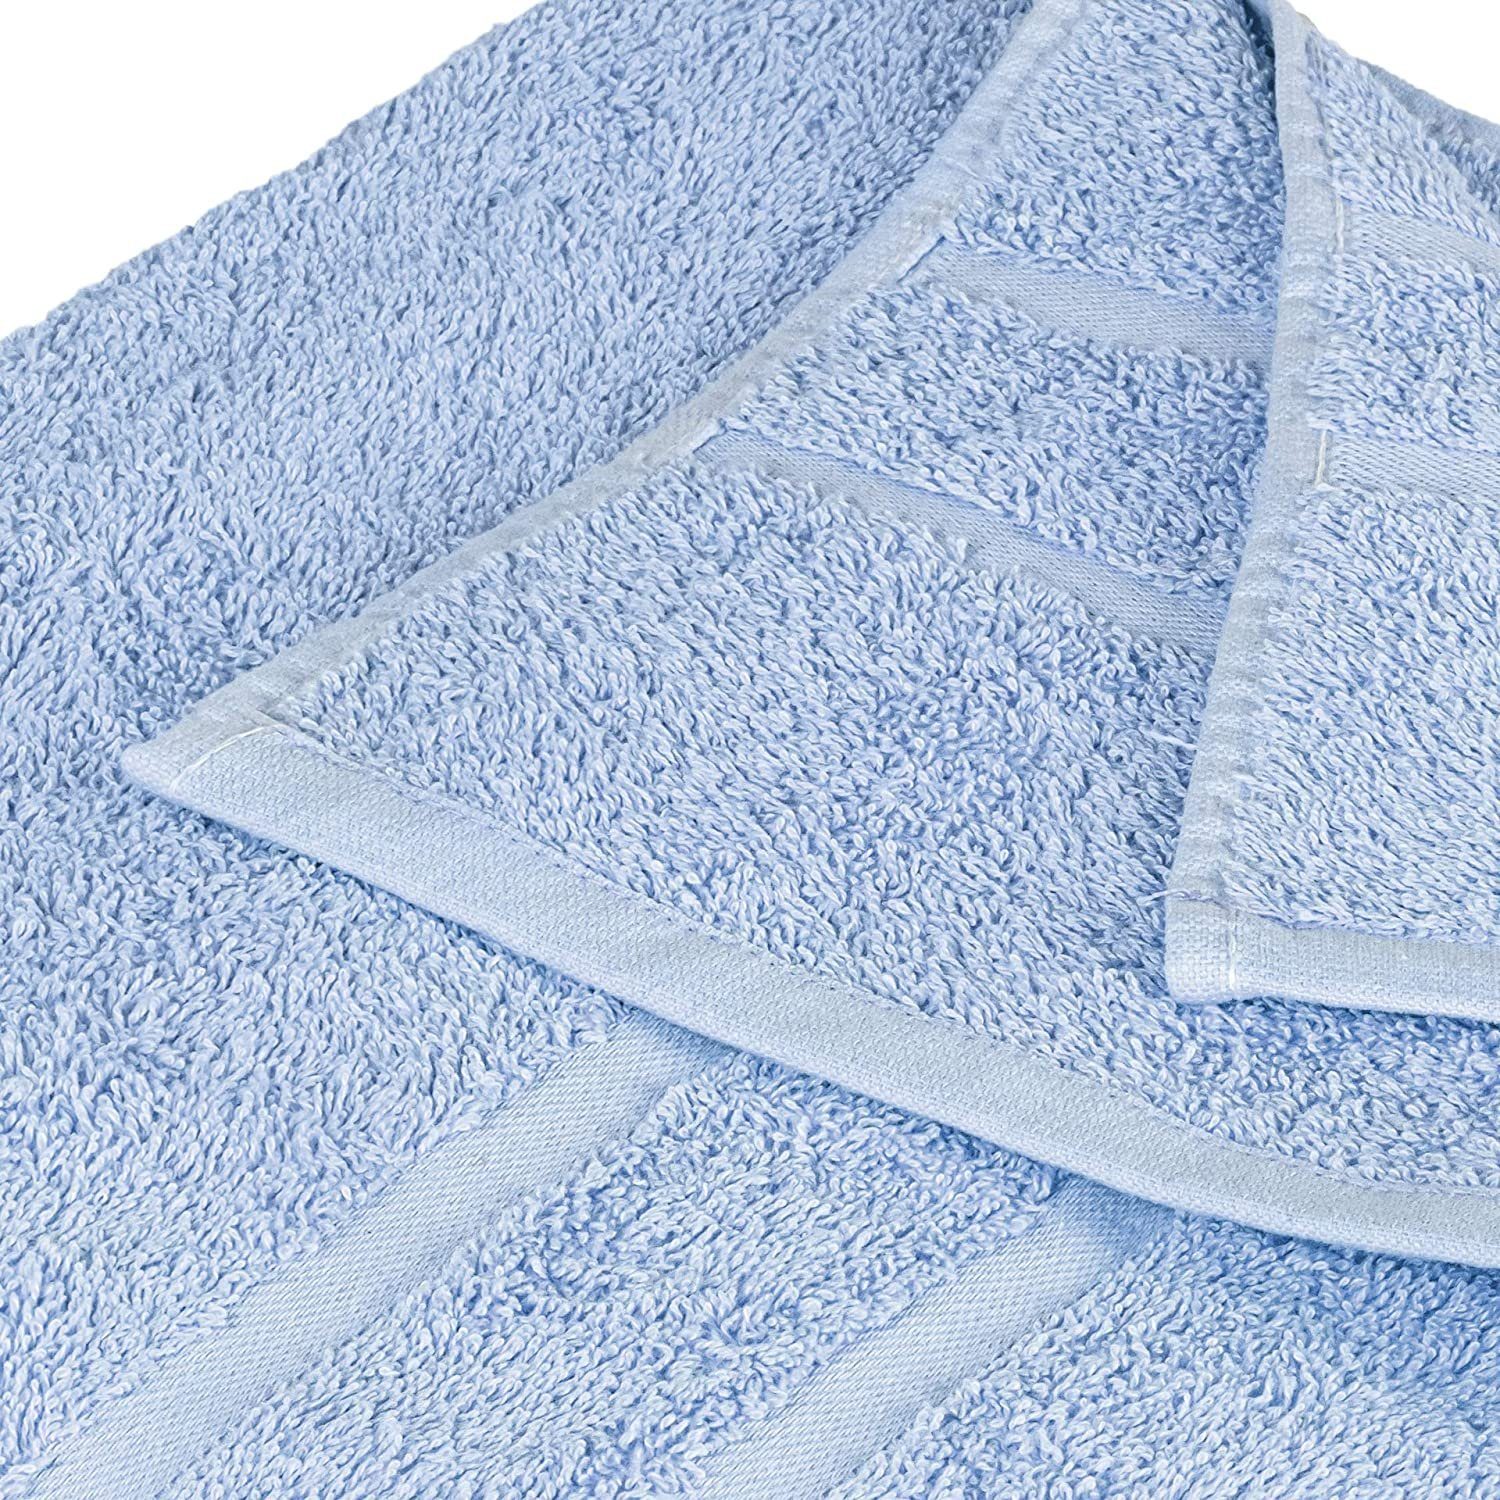 StickandShine Handtuch Handtücher Badetücher in Duschtücher 500 Baumwolle Wahl zur GSM 100% Hellblau Gästehandtücher Saunatücher